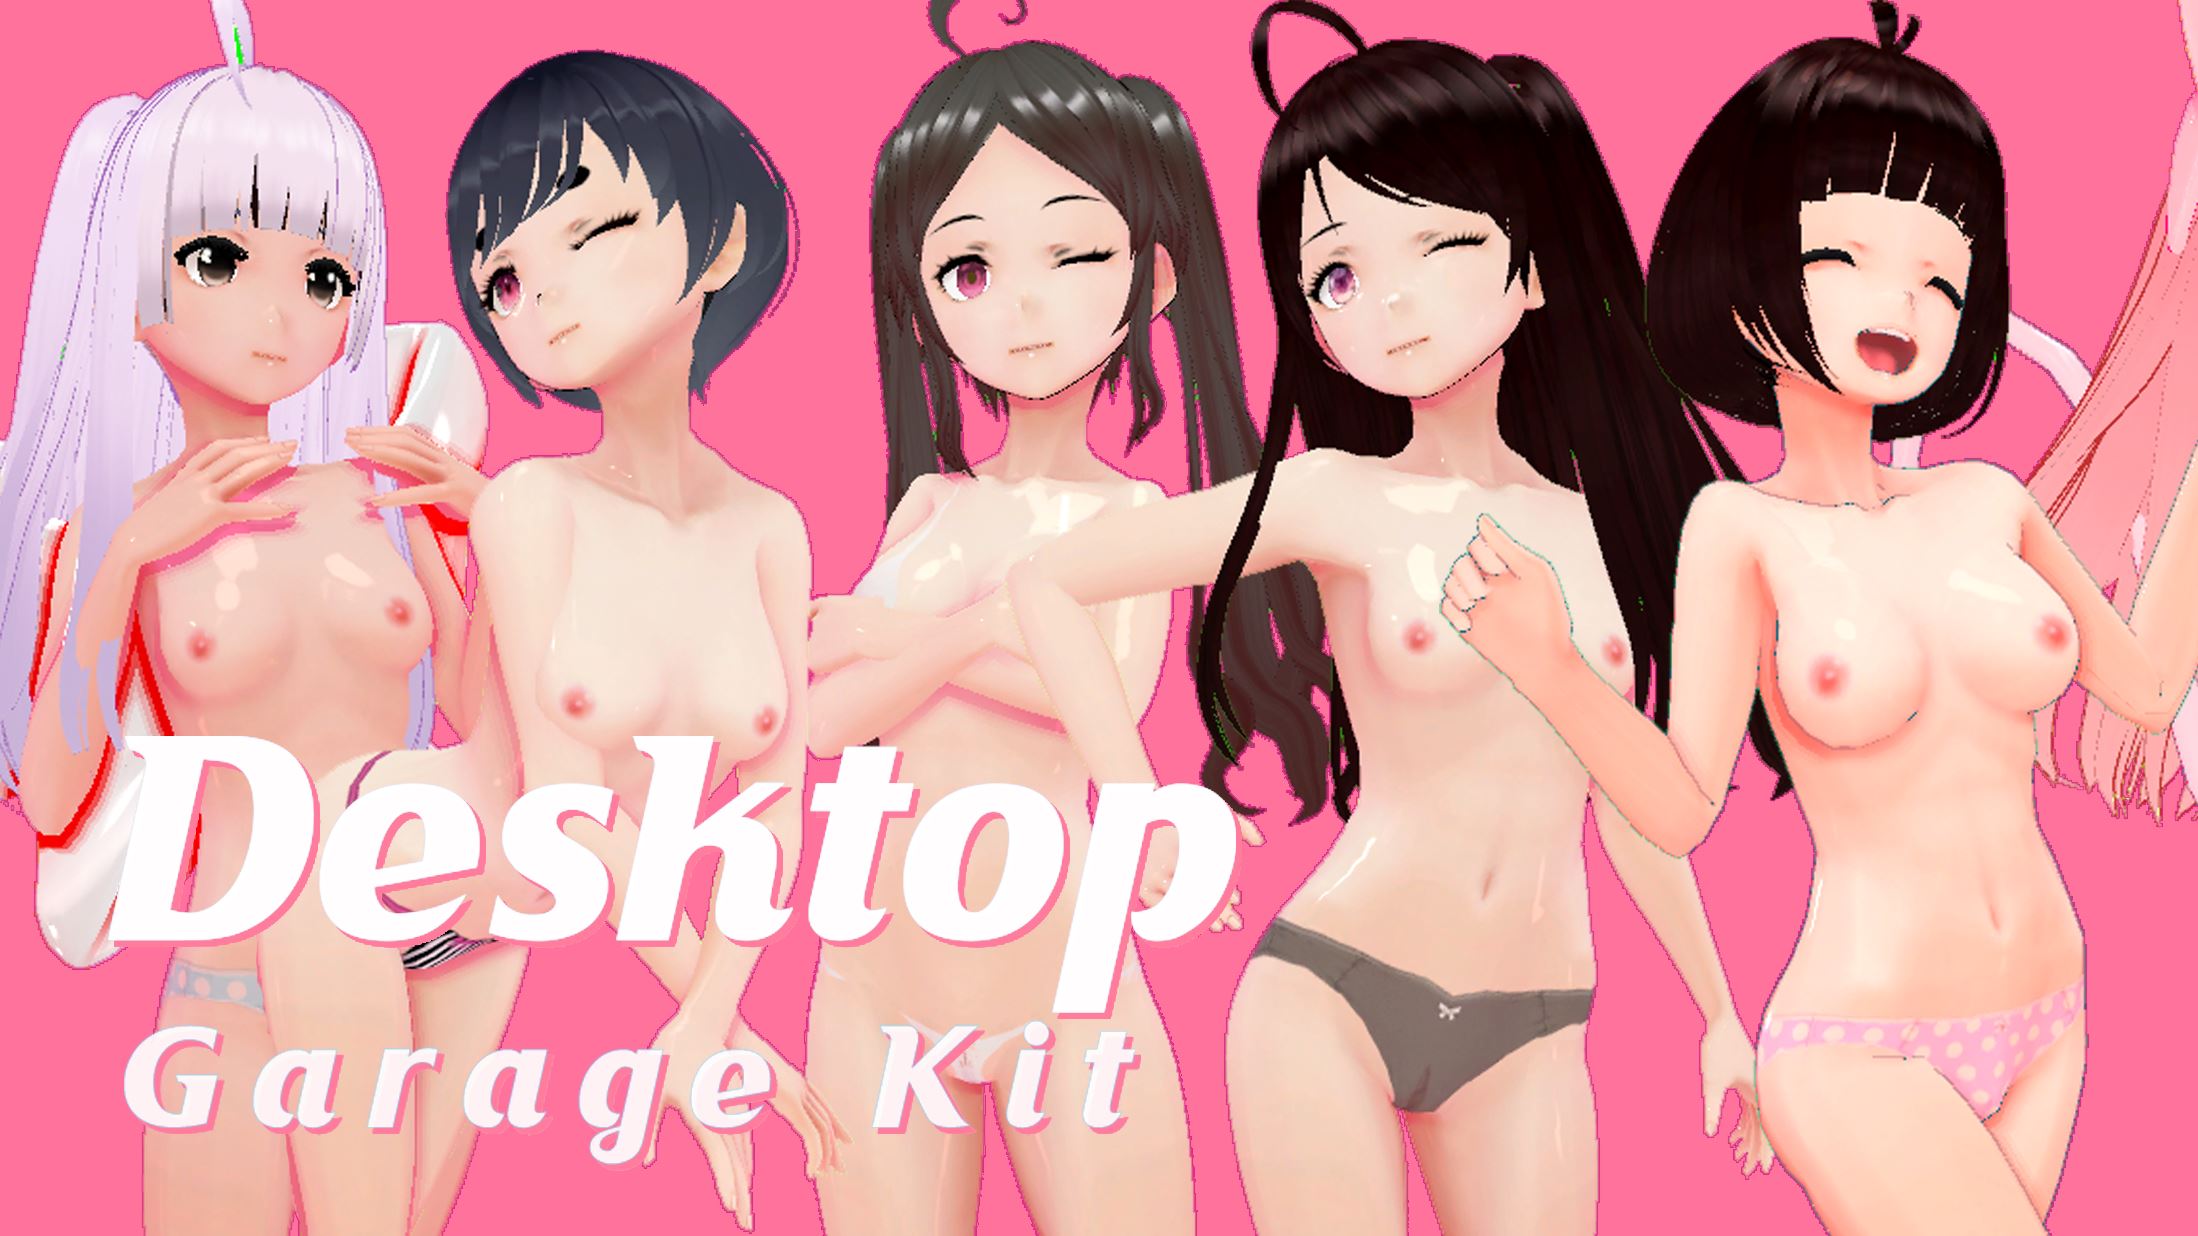 Desktop Garage Kit porn xxx game download cover